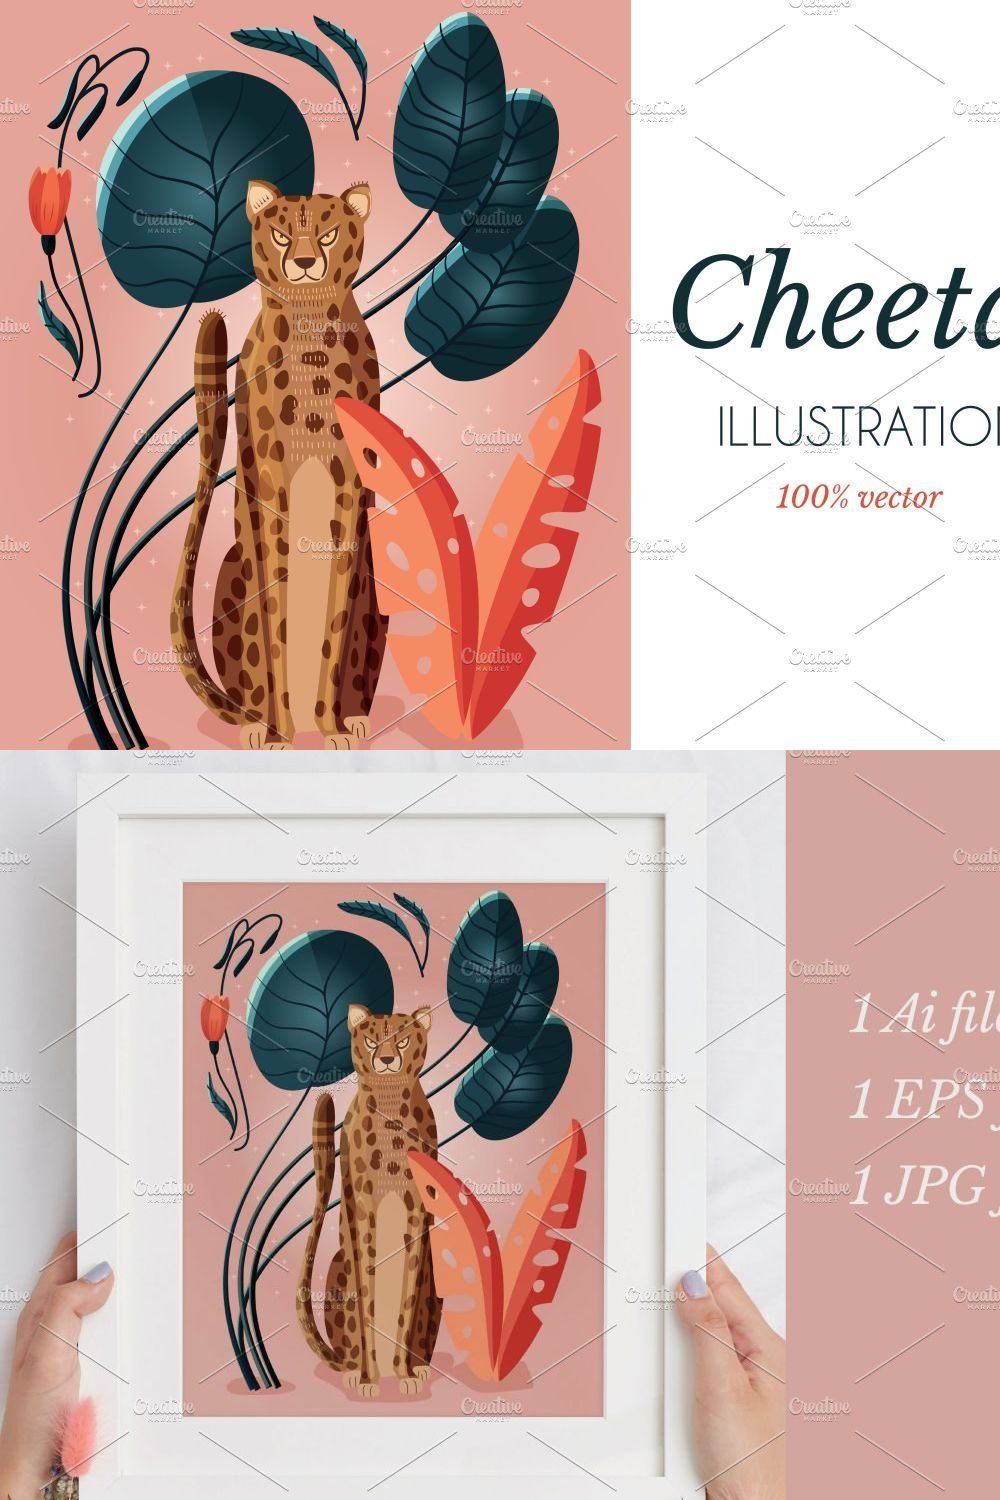 Cheetah Vector Illustration pinterest preview image.